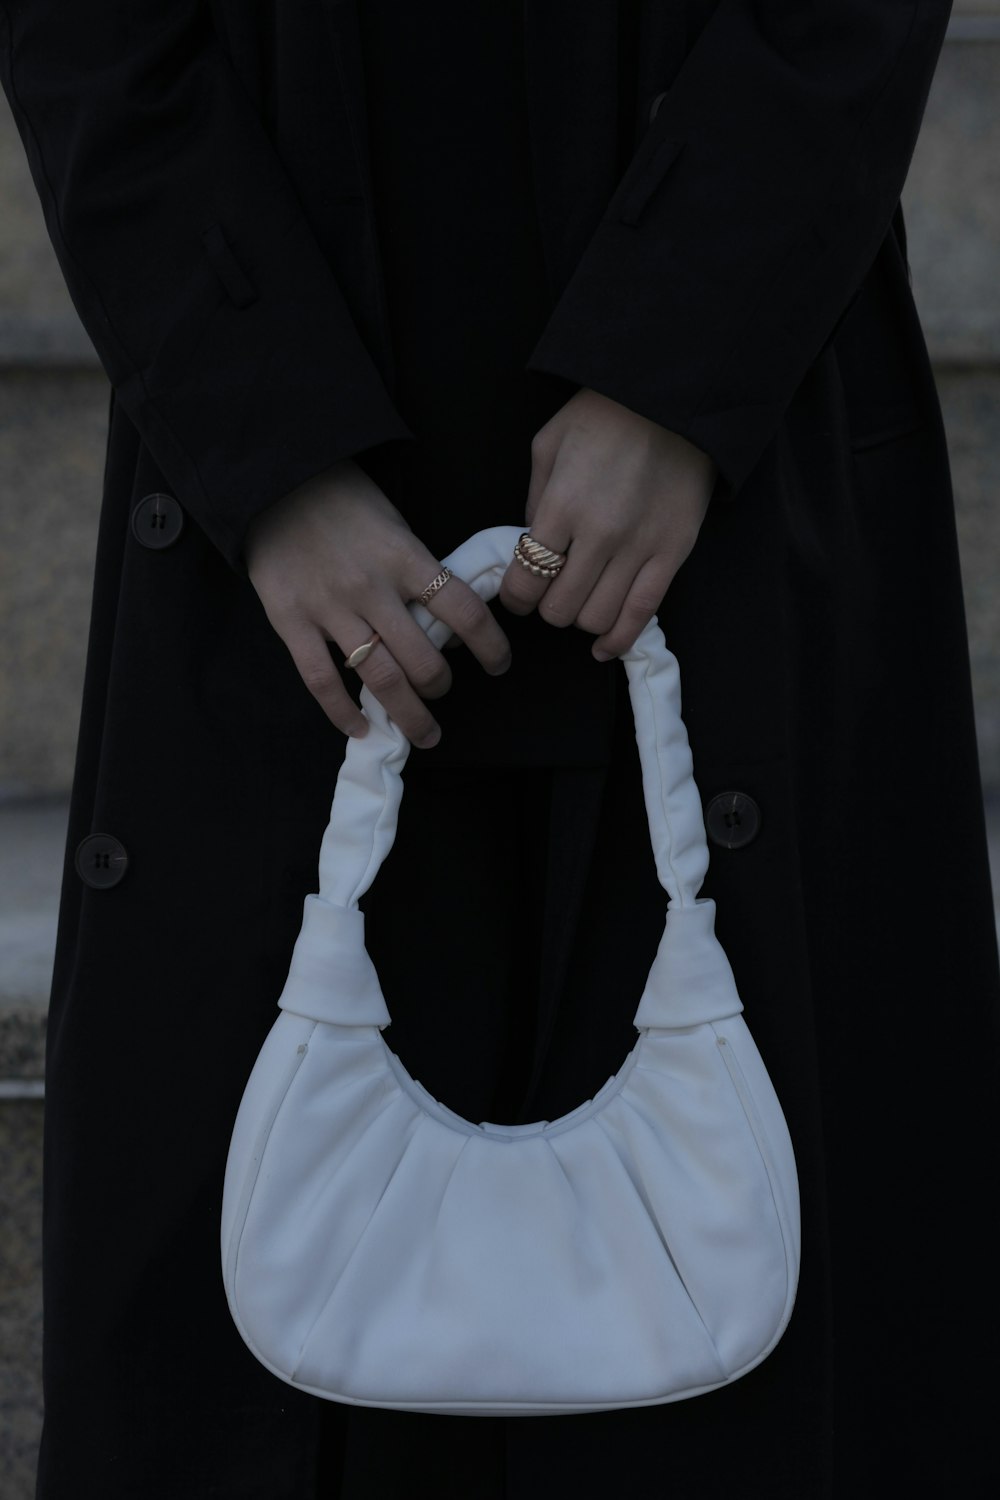 a person holding a white purse